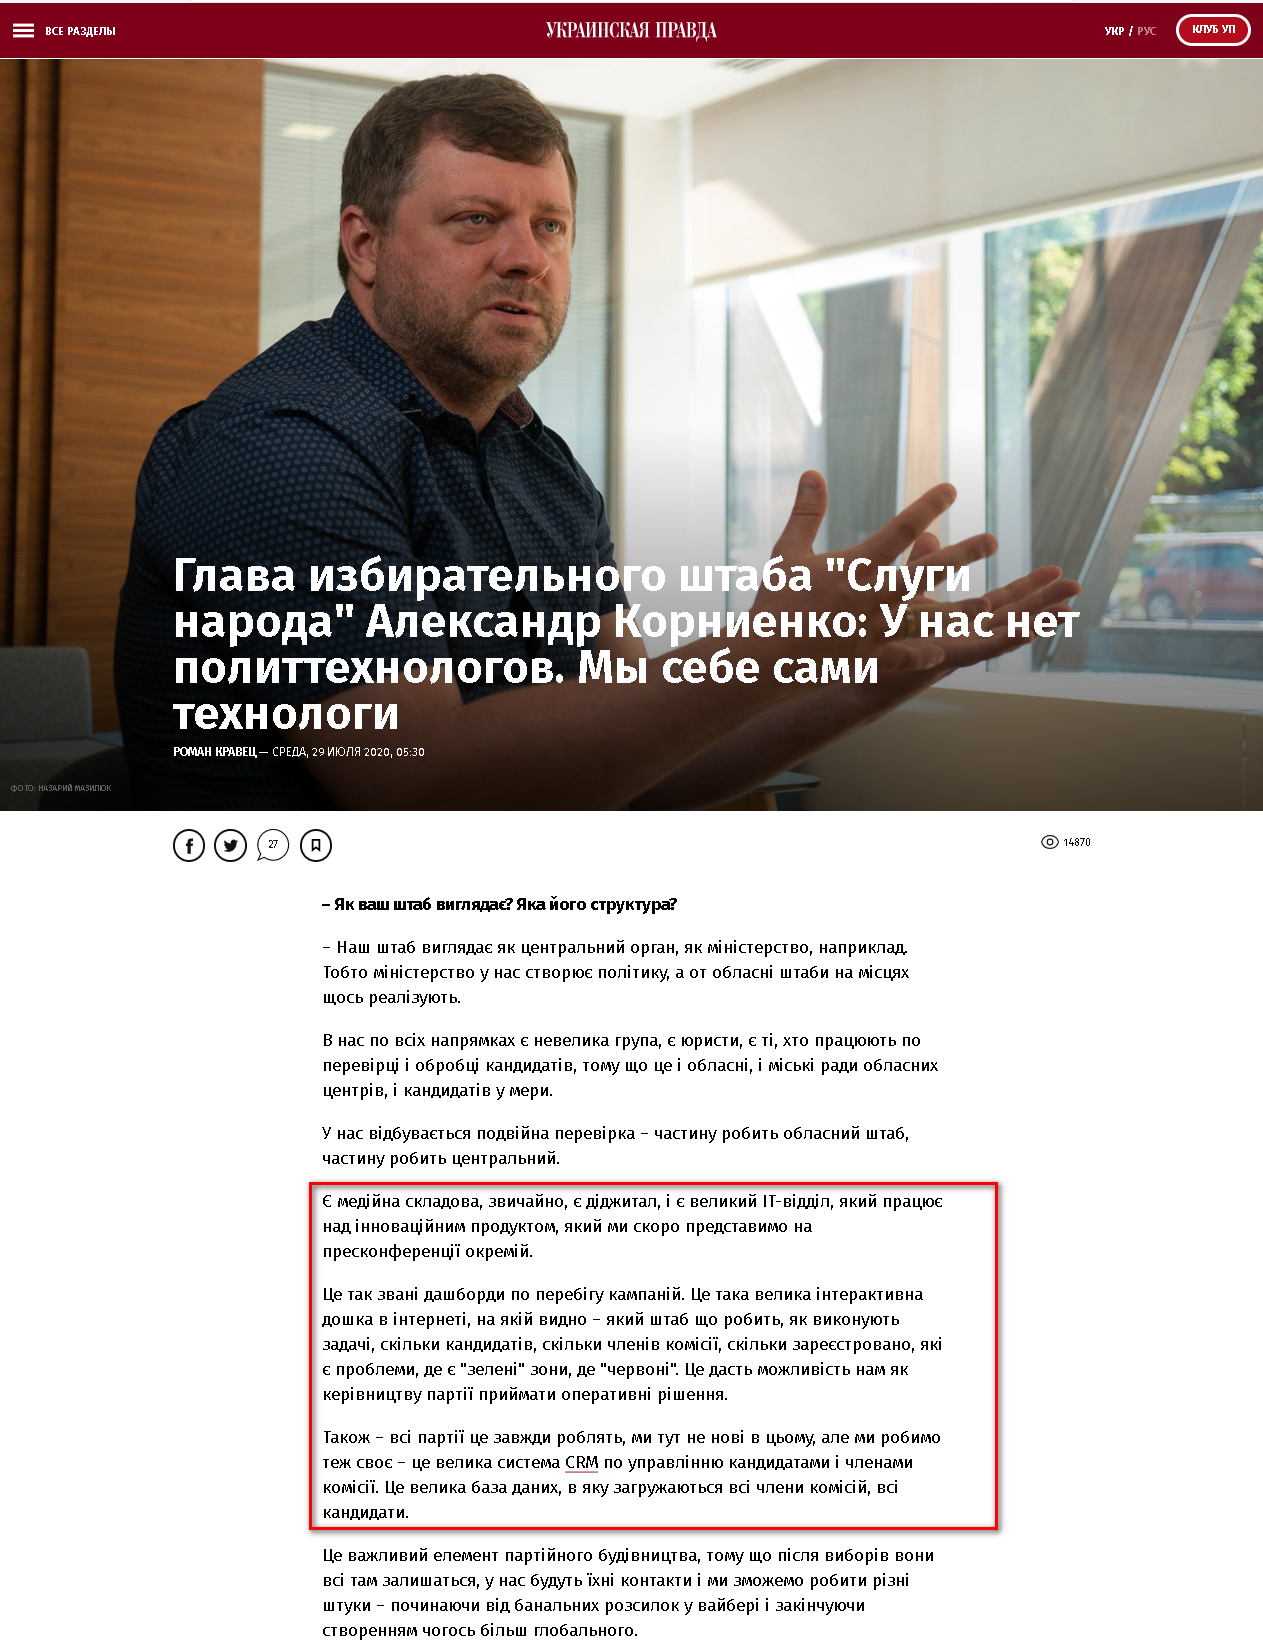 https://www.pravda.com.ua/rus/articles/2020/07/29/7261033/